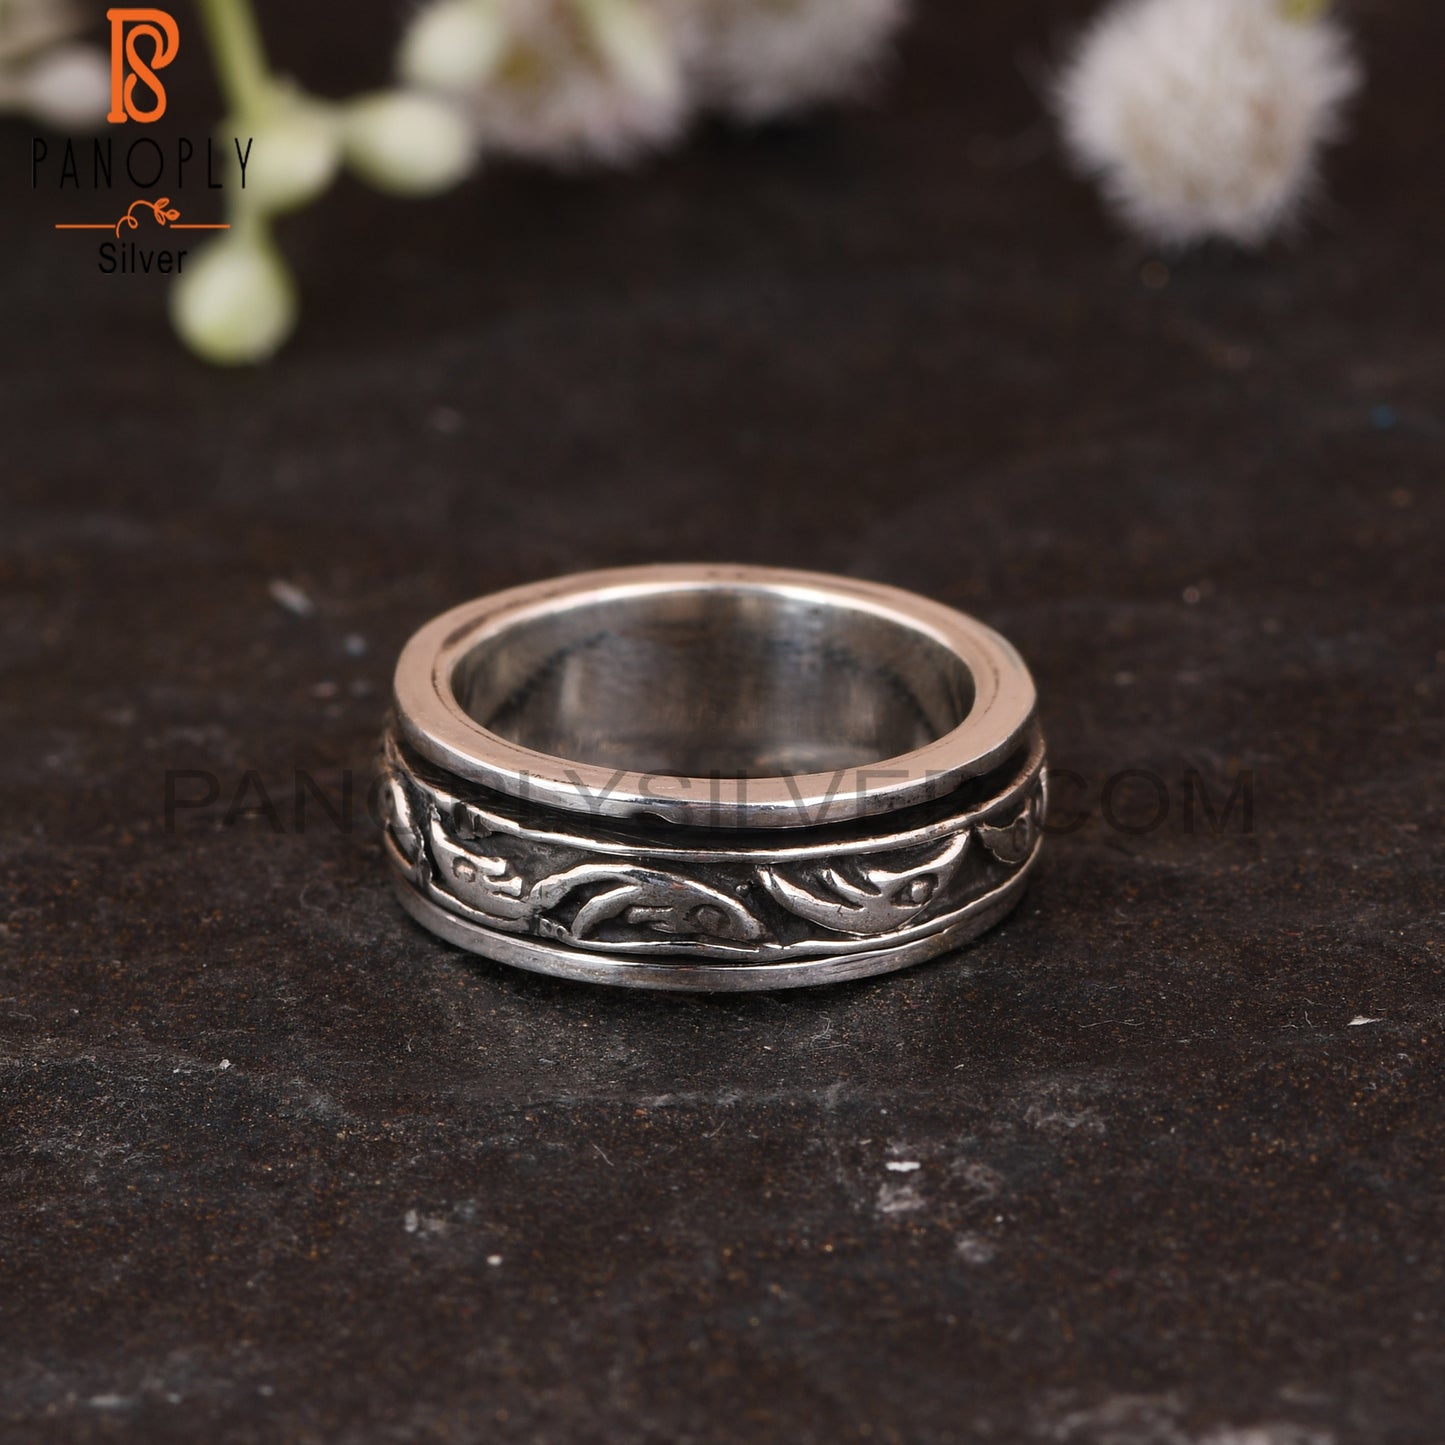 Handmade 925 Sterling Silver Filigree Ring